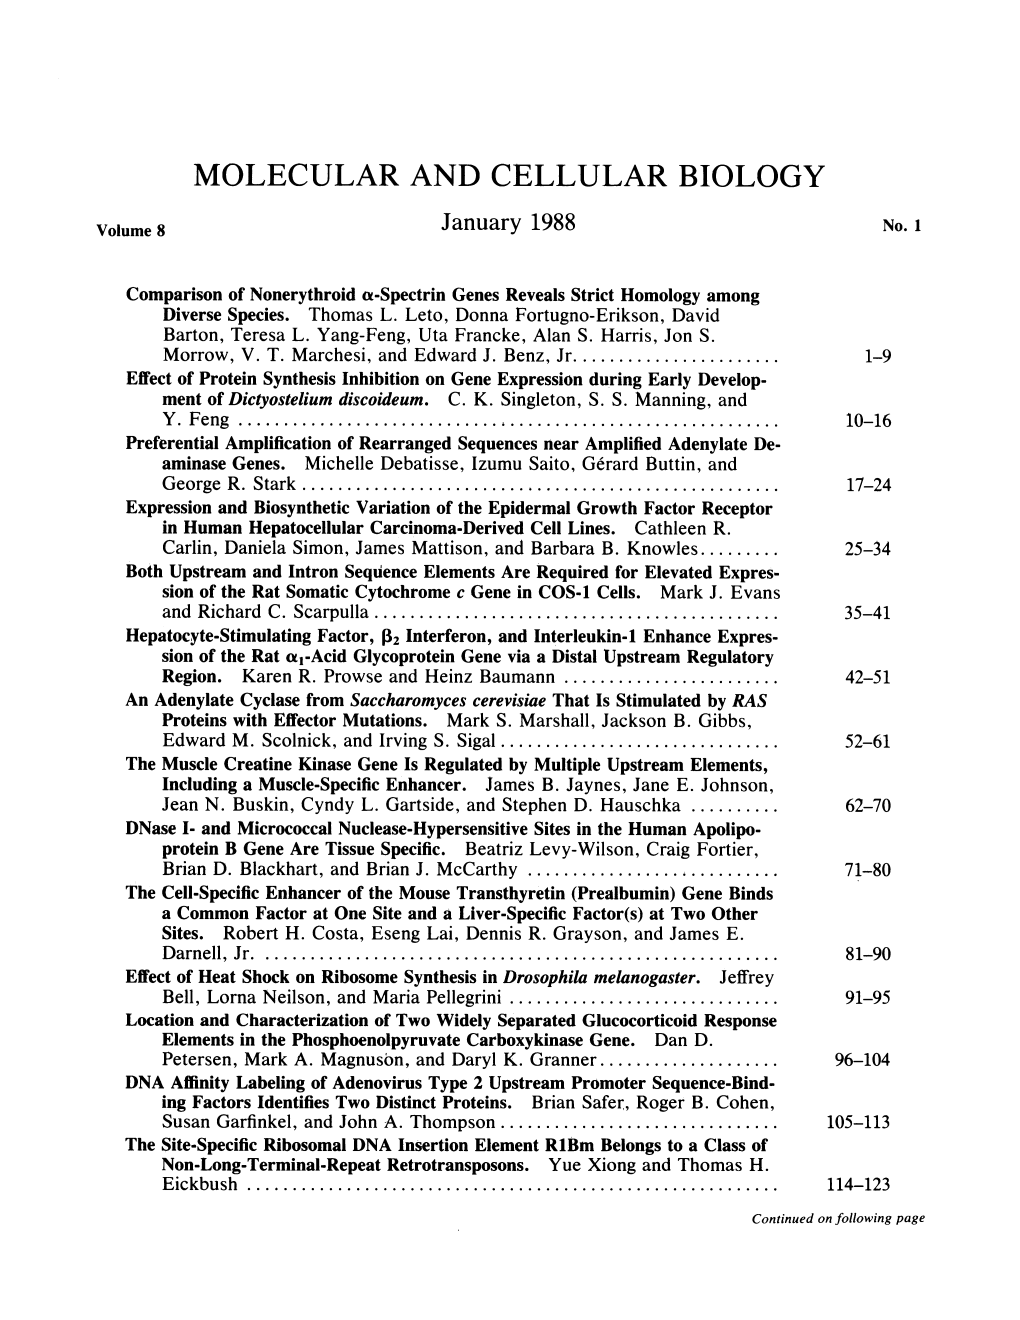 MOLECULAR and CELLULAR BIOLOGY Volume 8 January 1988 No